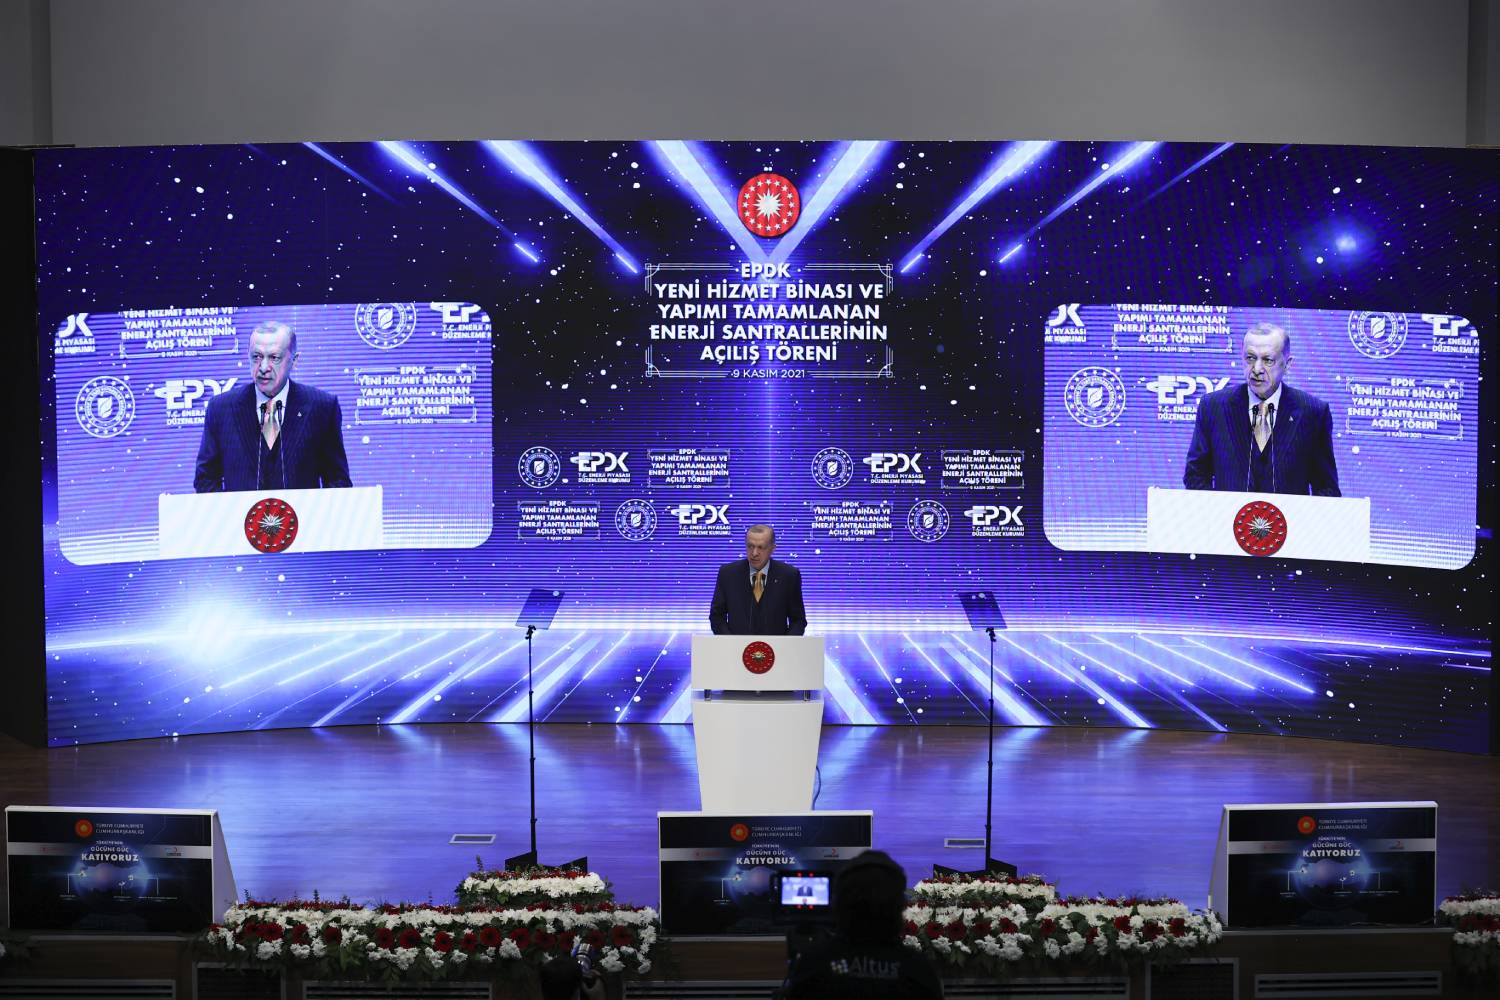 Akkuyu NPP will greatly contribute to Turkey&#8217;s energy security: Erdogan